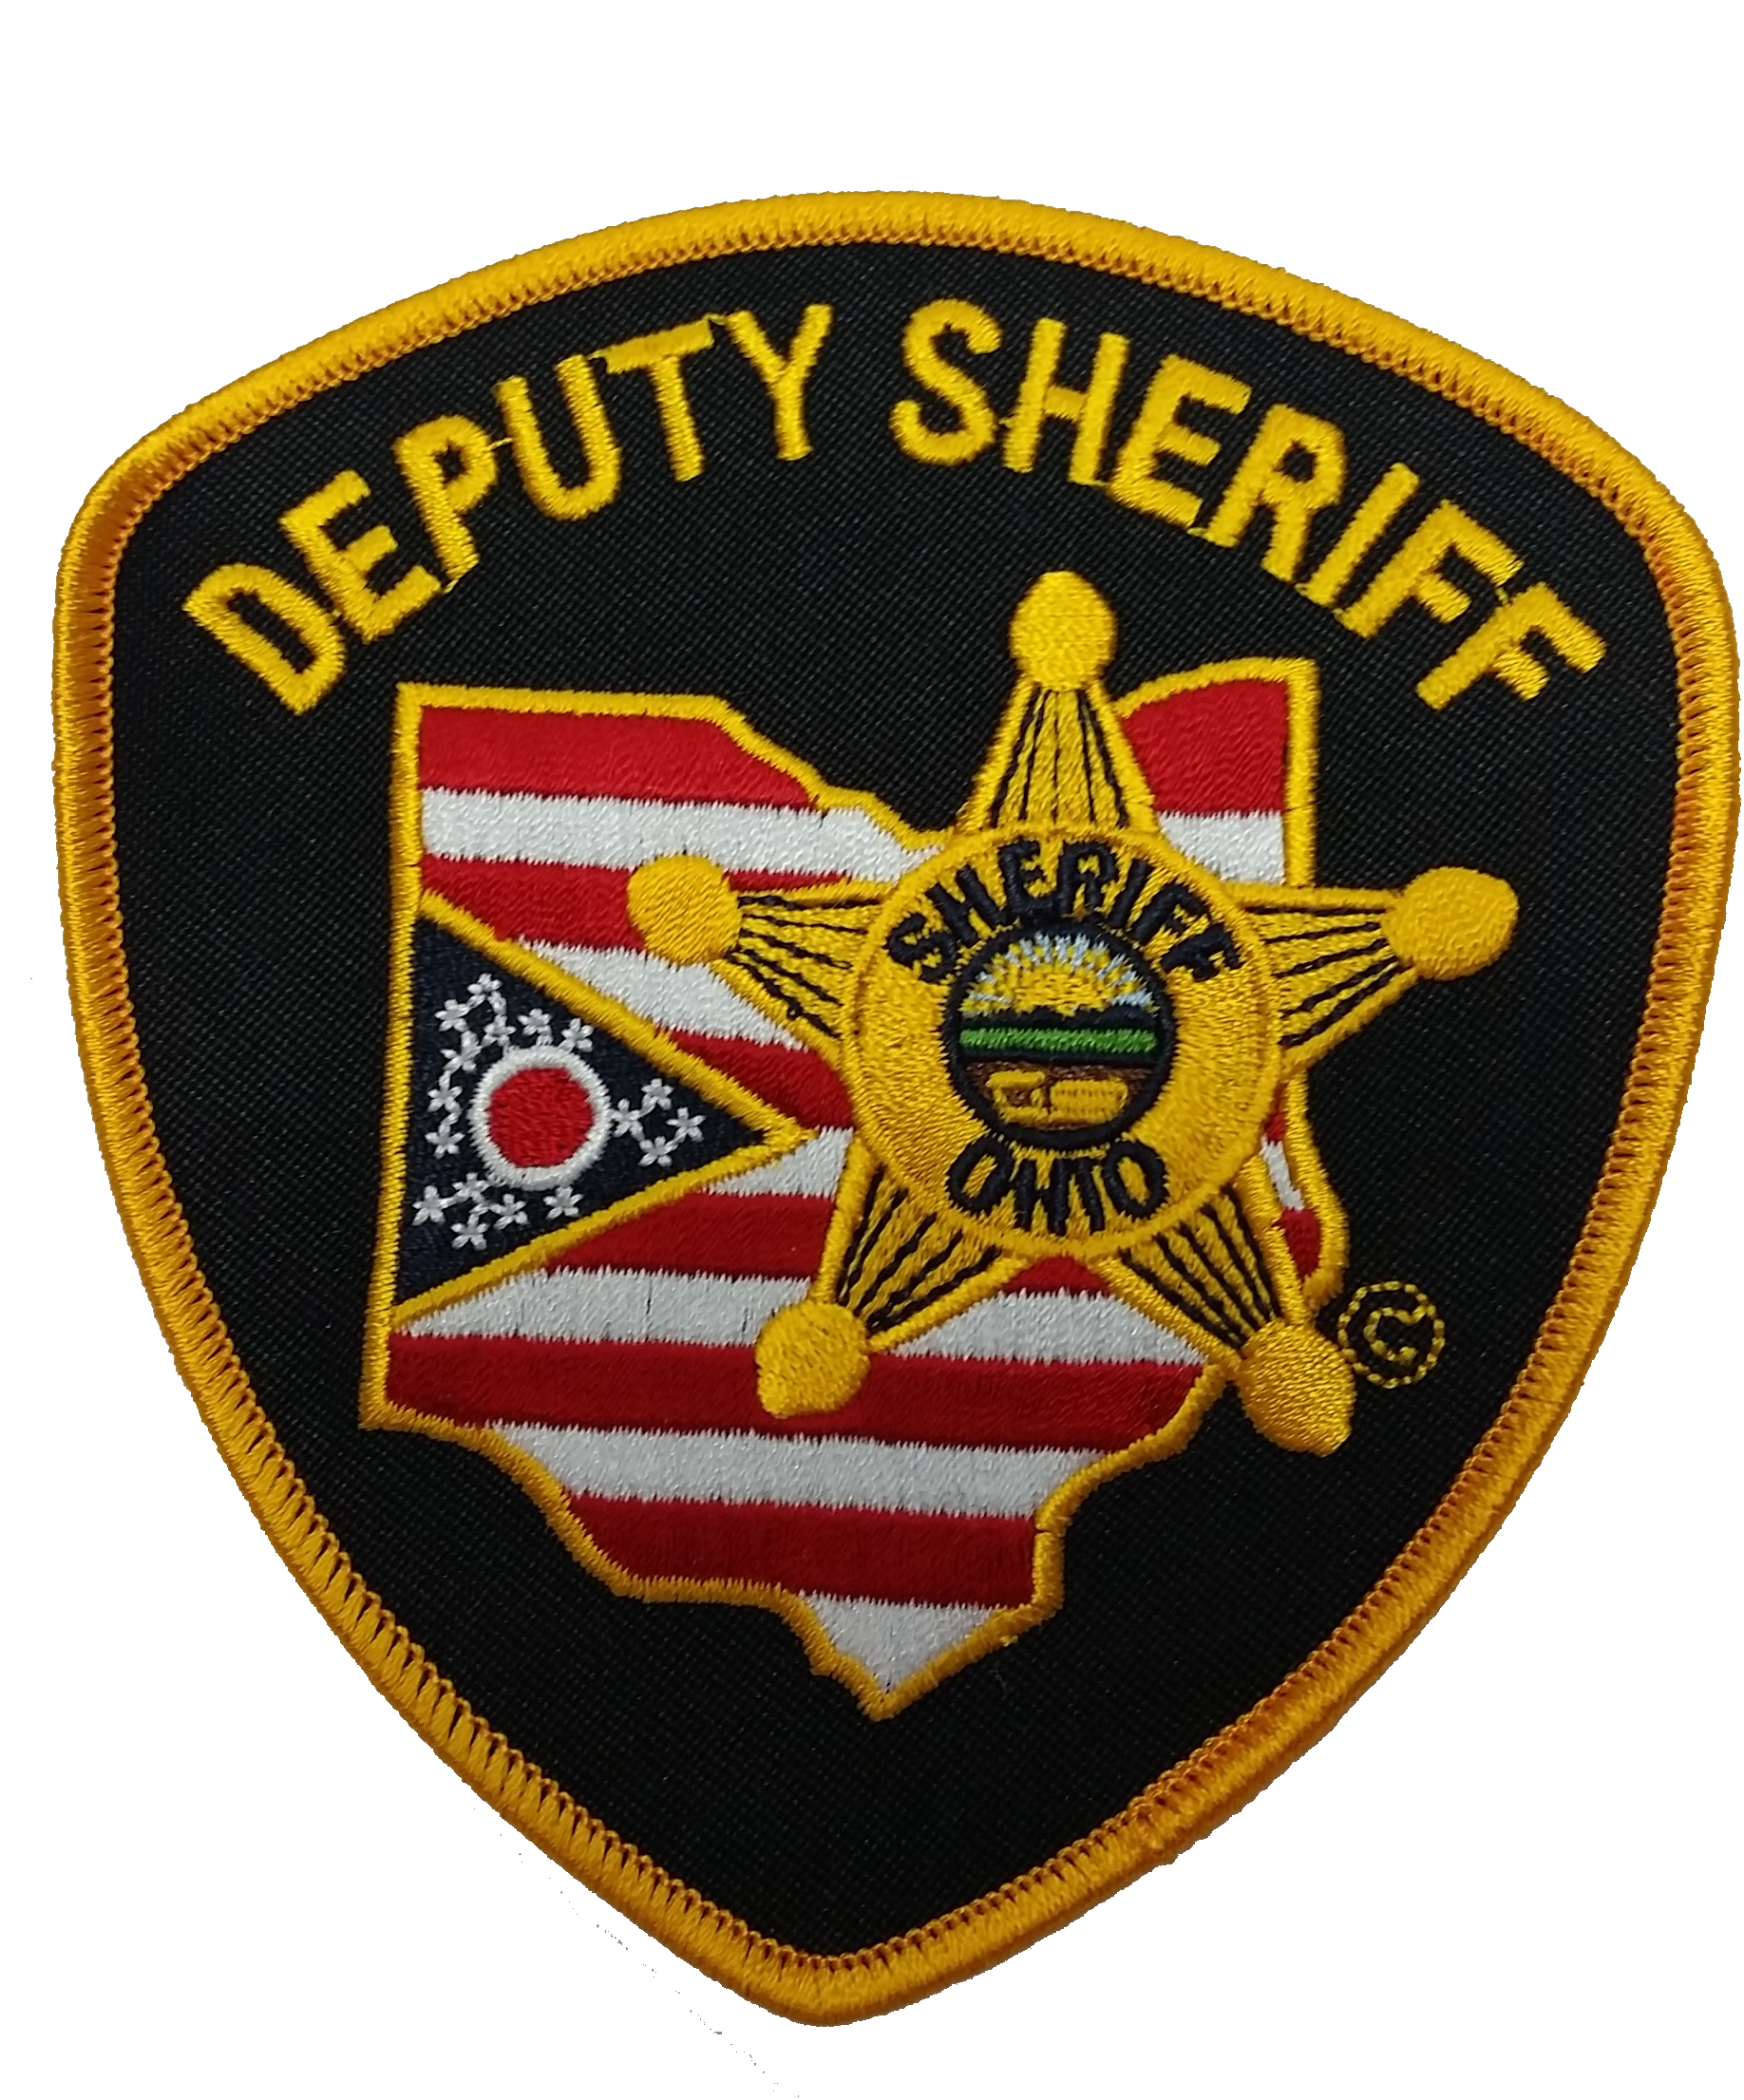 Ohio Sheriff "Deputy Sheriff" Patches - 2 Pack - red-diamond-uniform-police-supply